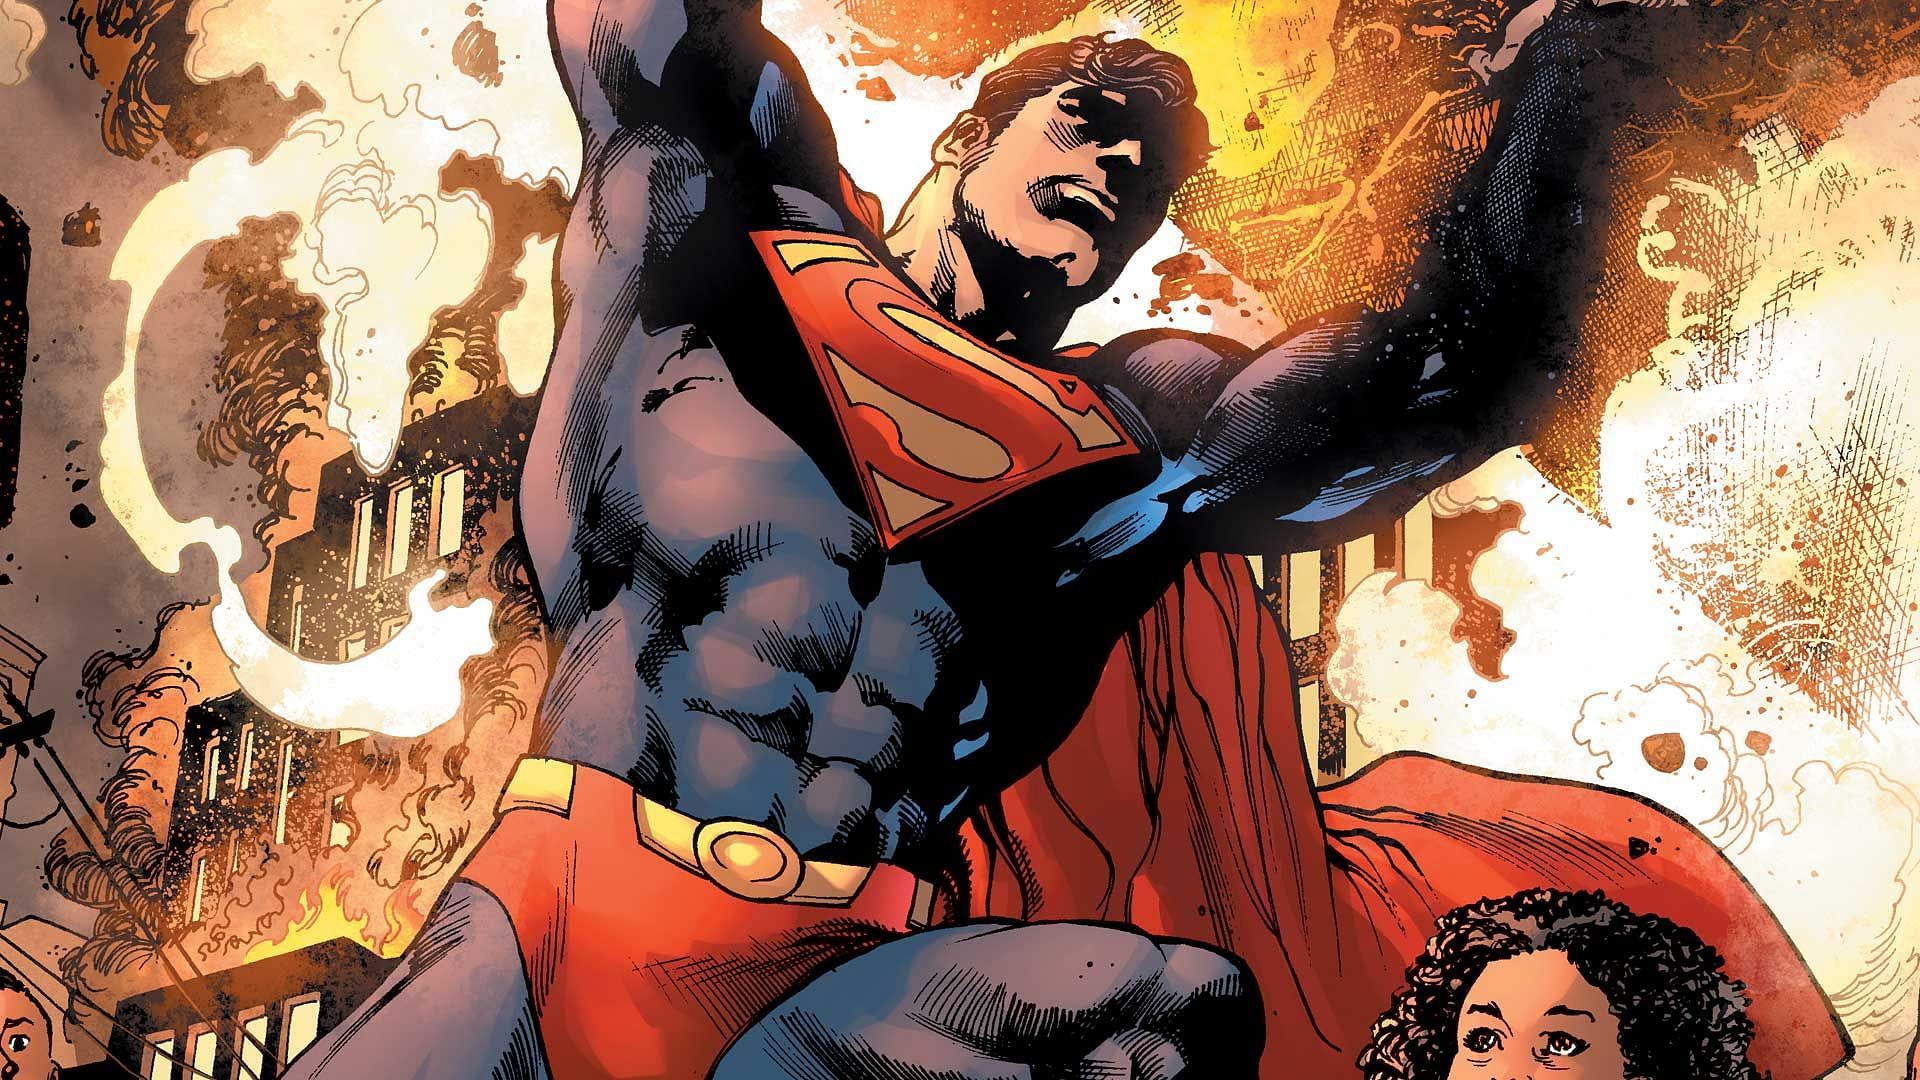 The superhero also has a regular job as a reporter named Clark Kent (Image credit DC)